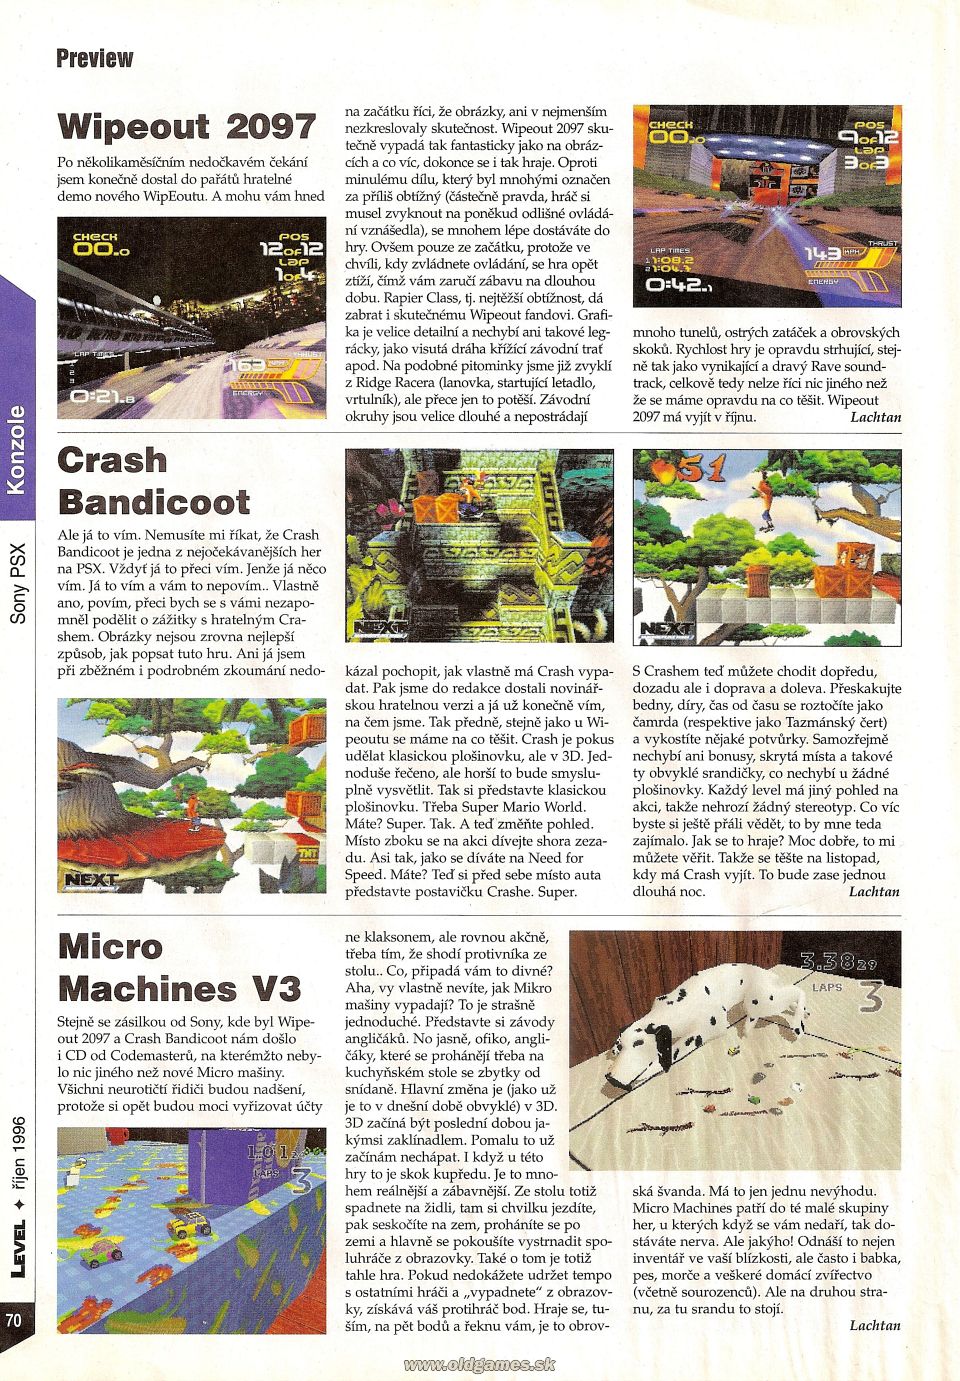 Preview: Wipeout 2097, Crash Bandicoot, Micro Machines V3